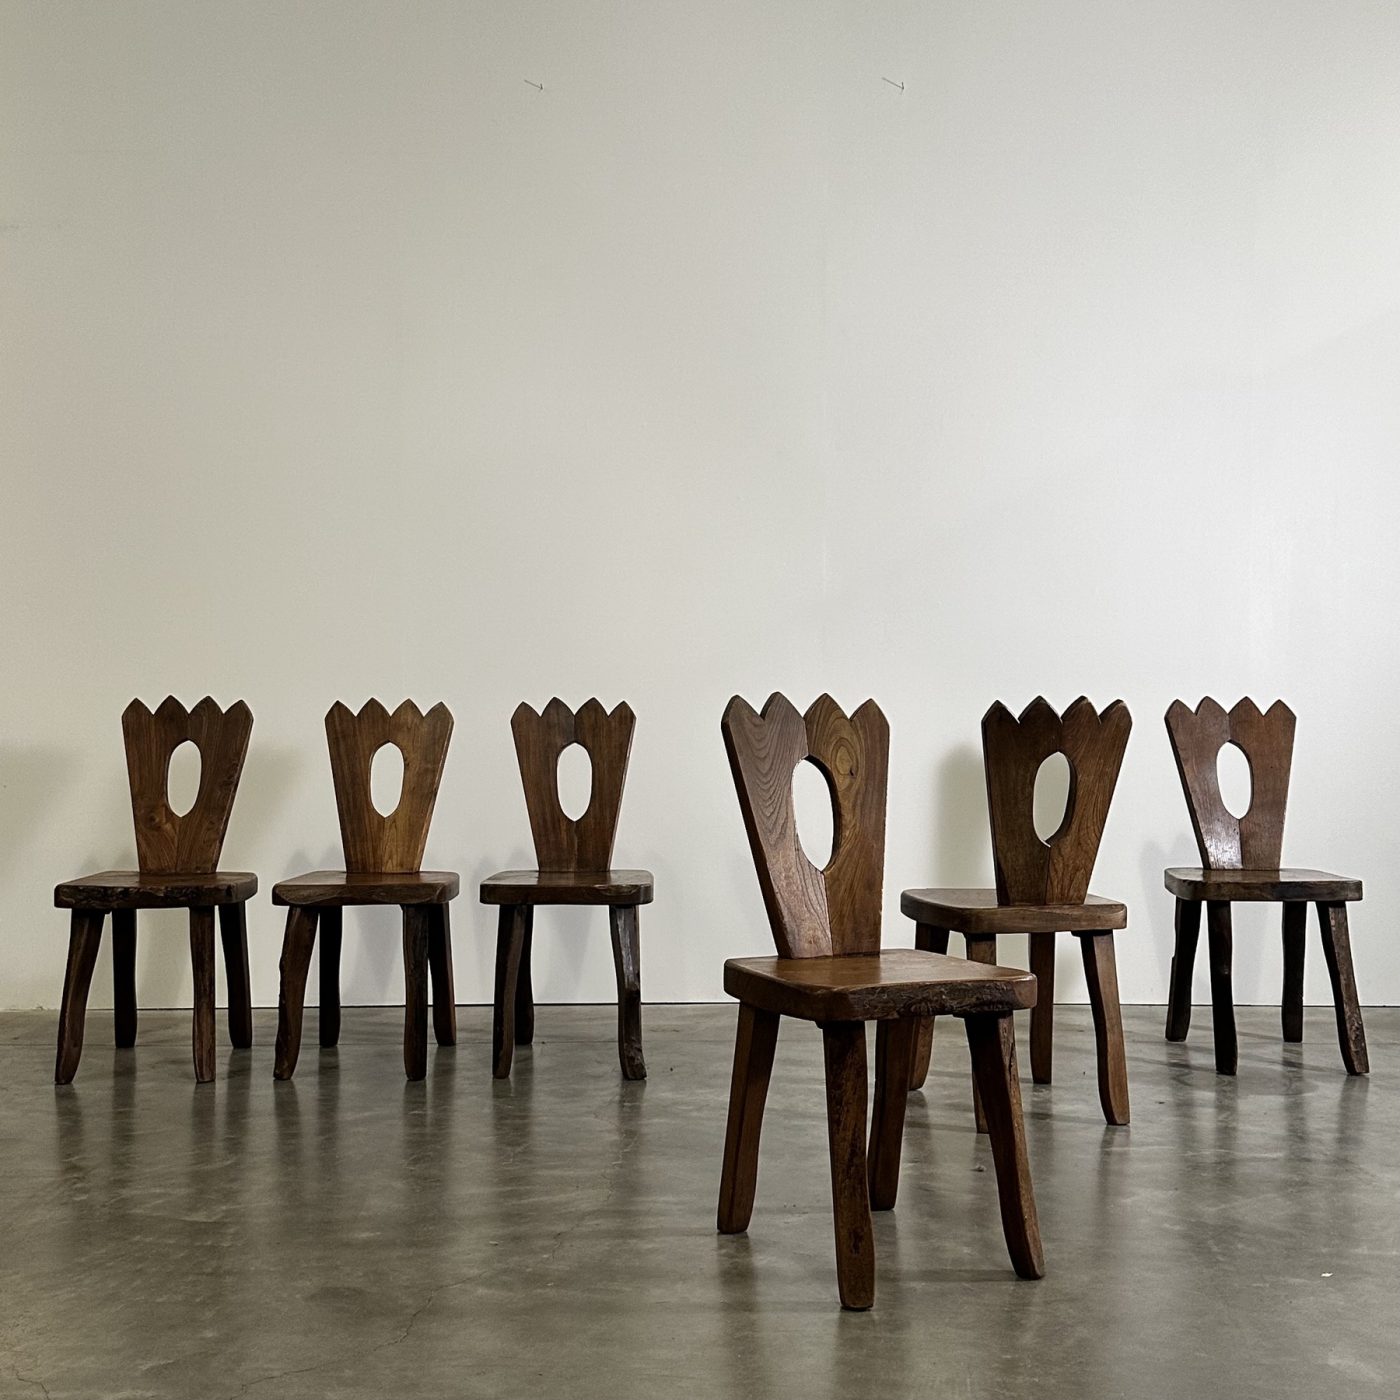 objet-vagabond-brutalist-chairs0005